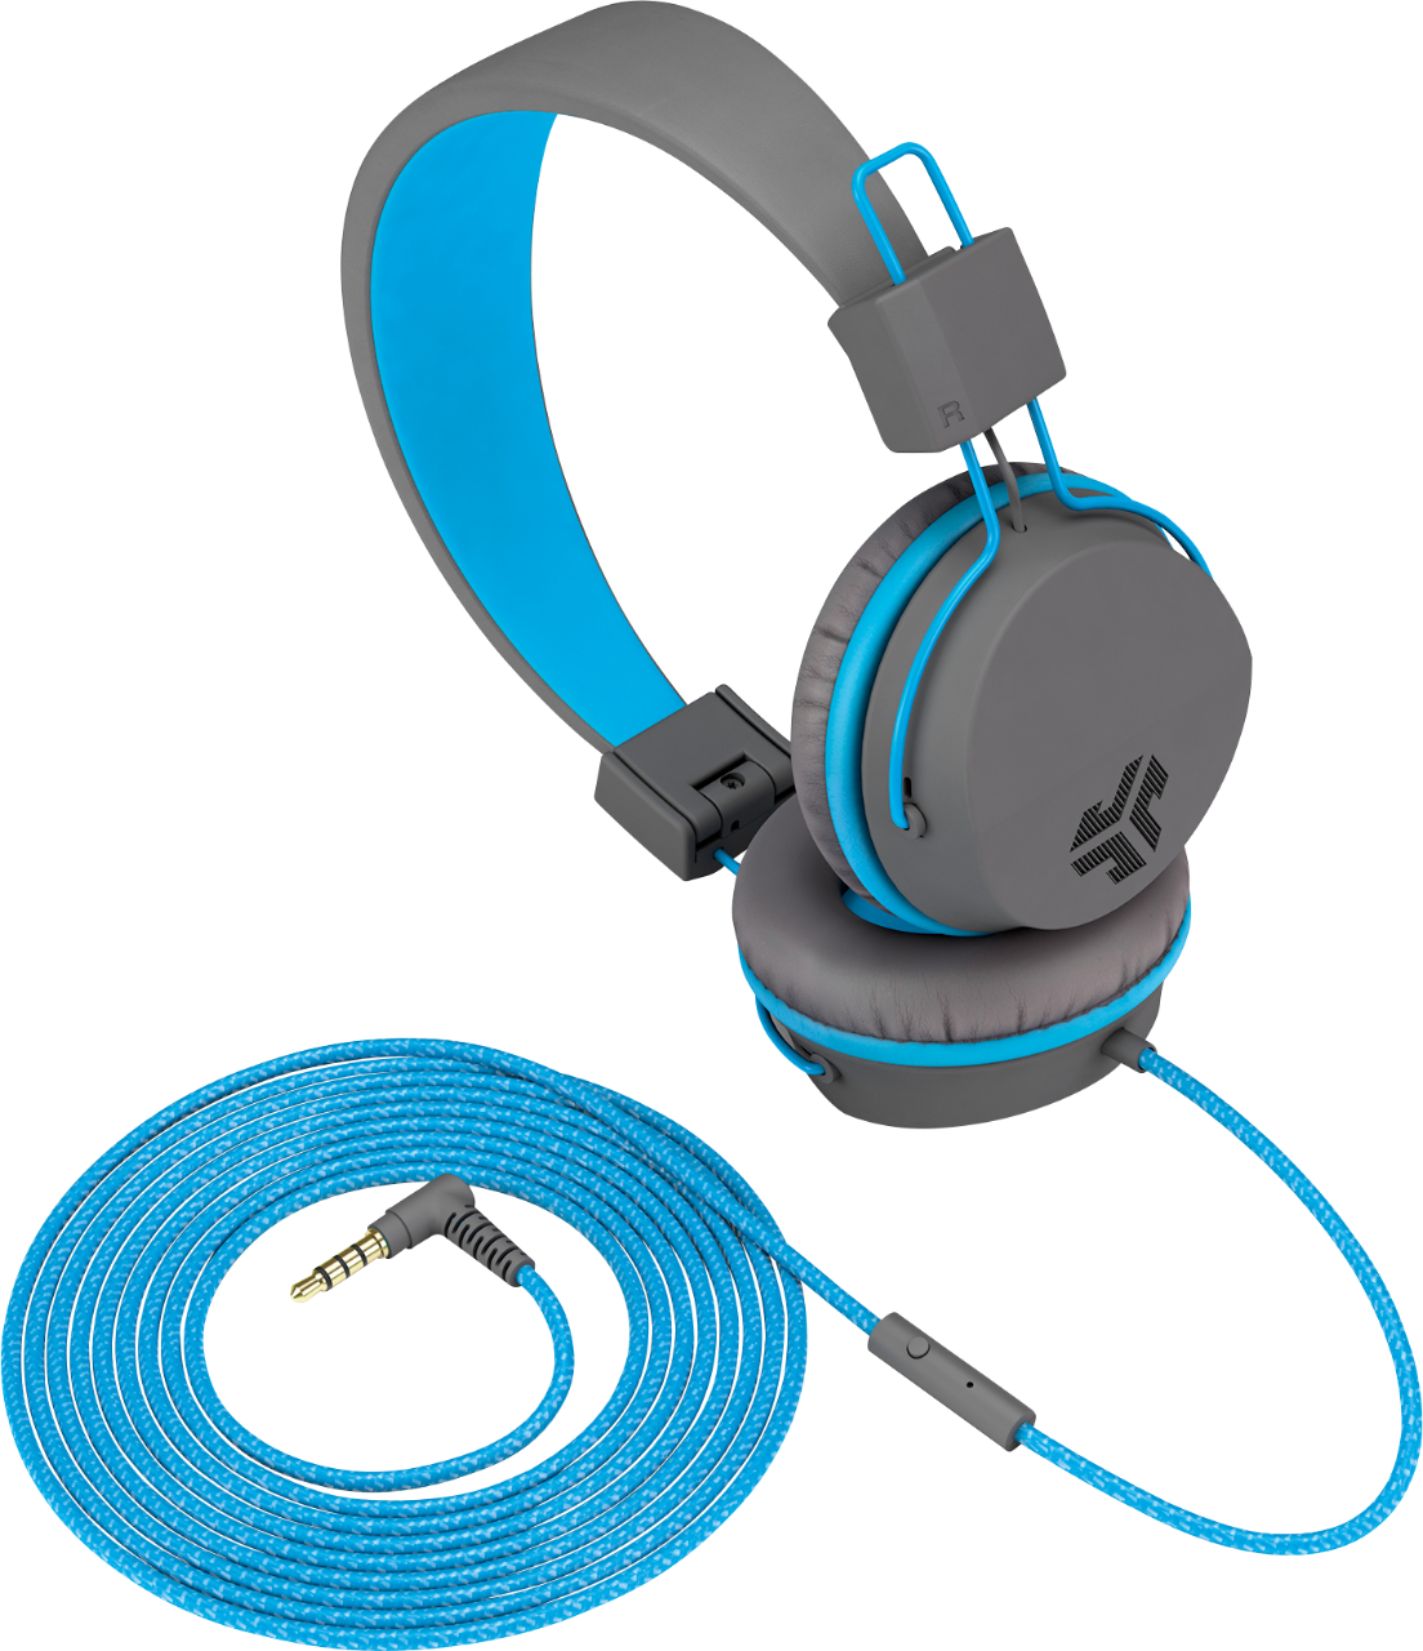 jbuddies studio headphones bluetooth